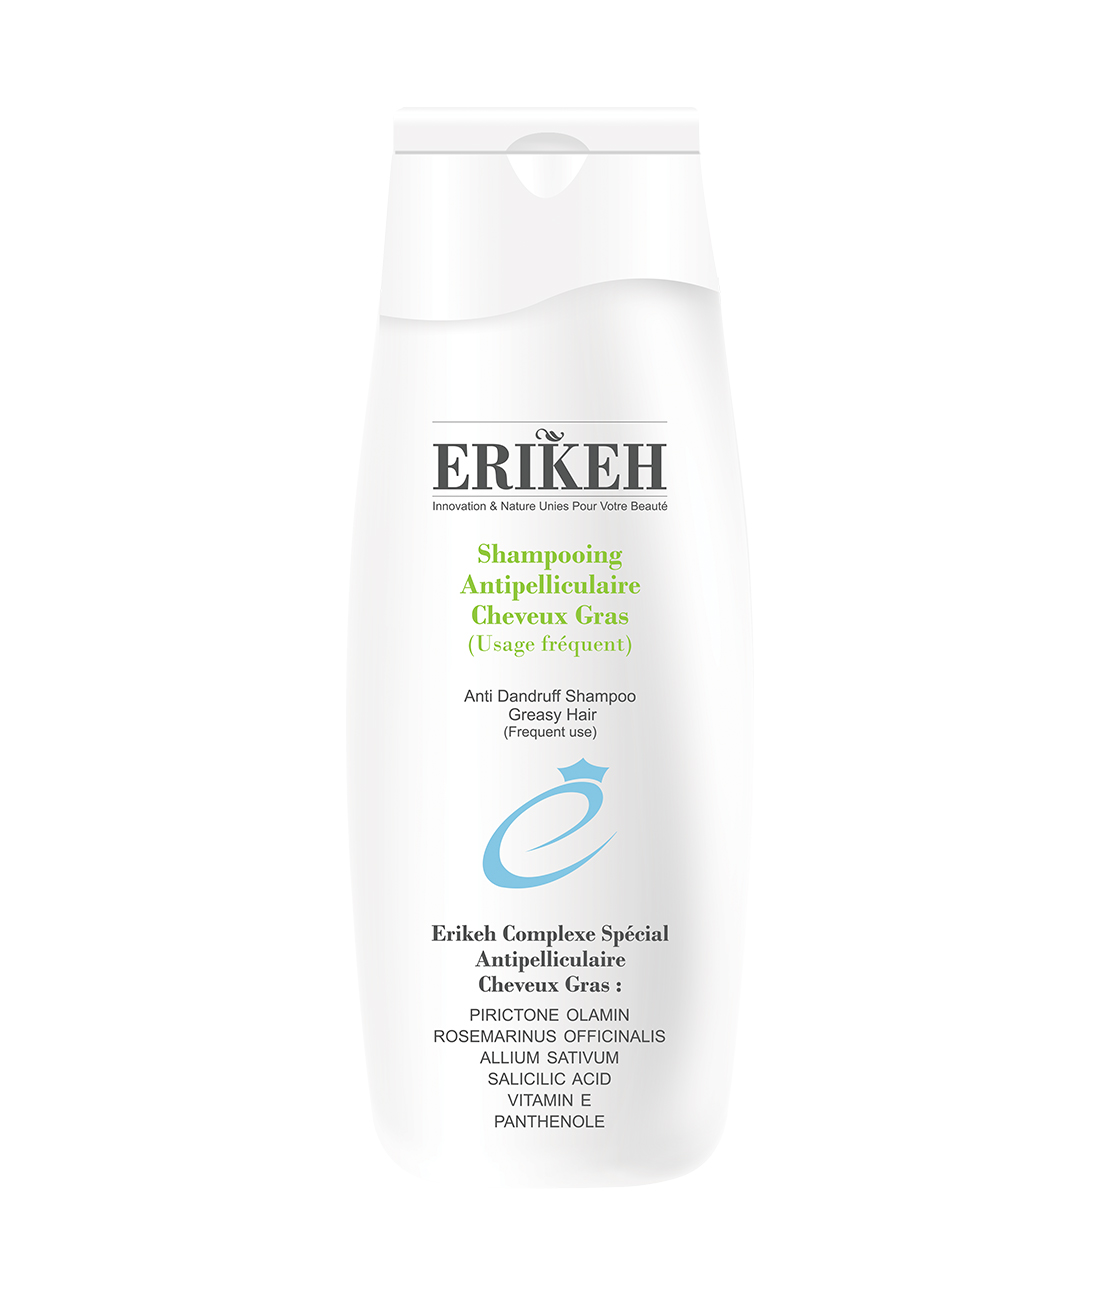 Erikeh Paris - Anti-Dandruff Shampoo Greasy Hair